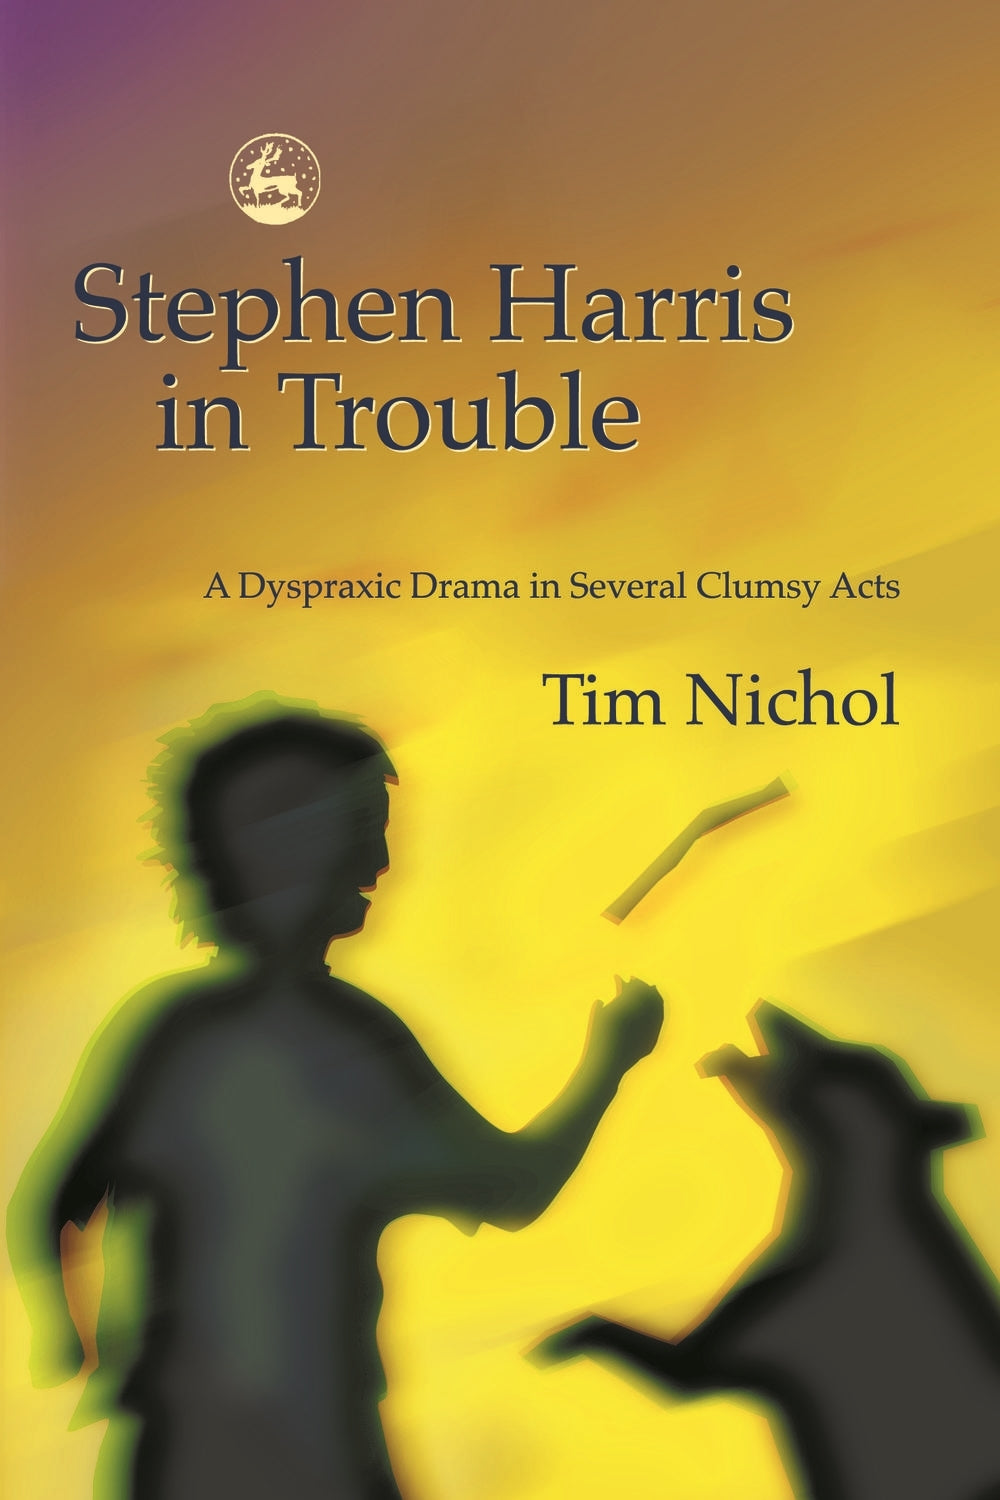 Stephen Harris in Trouble by Tim Nichol